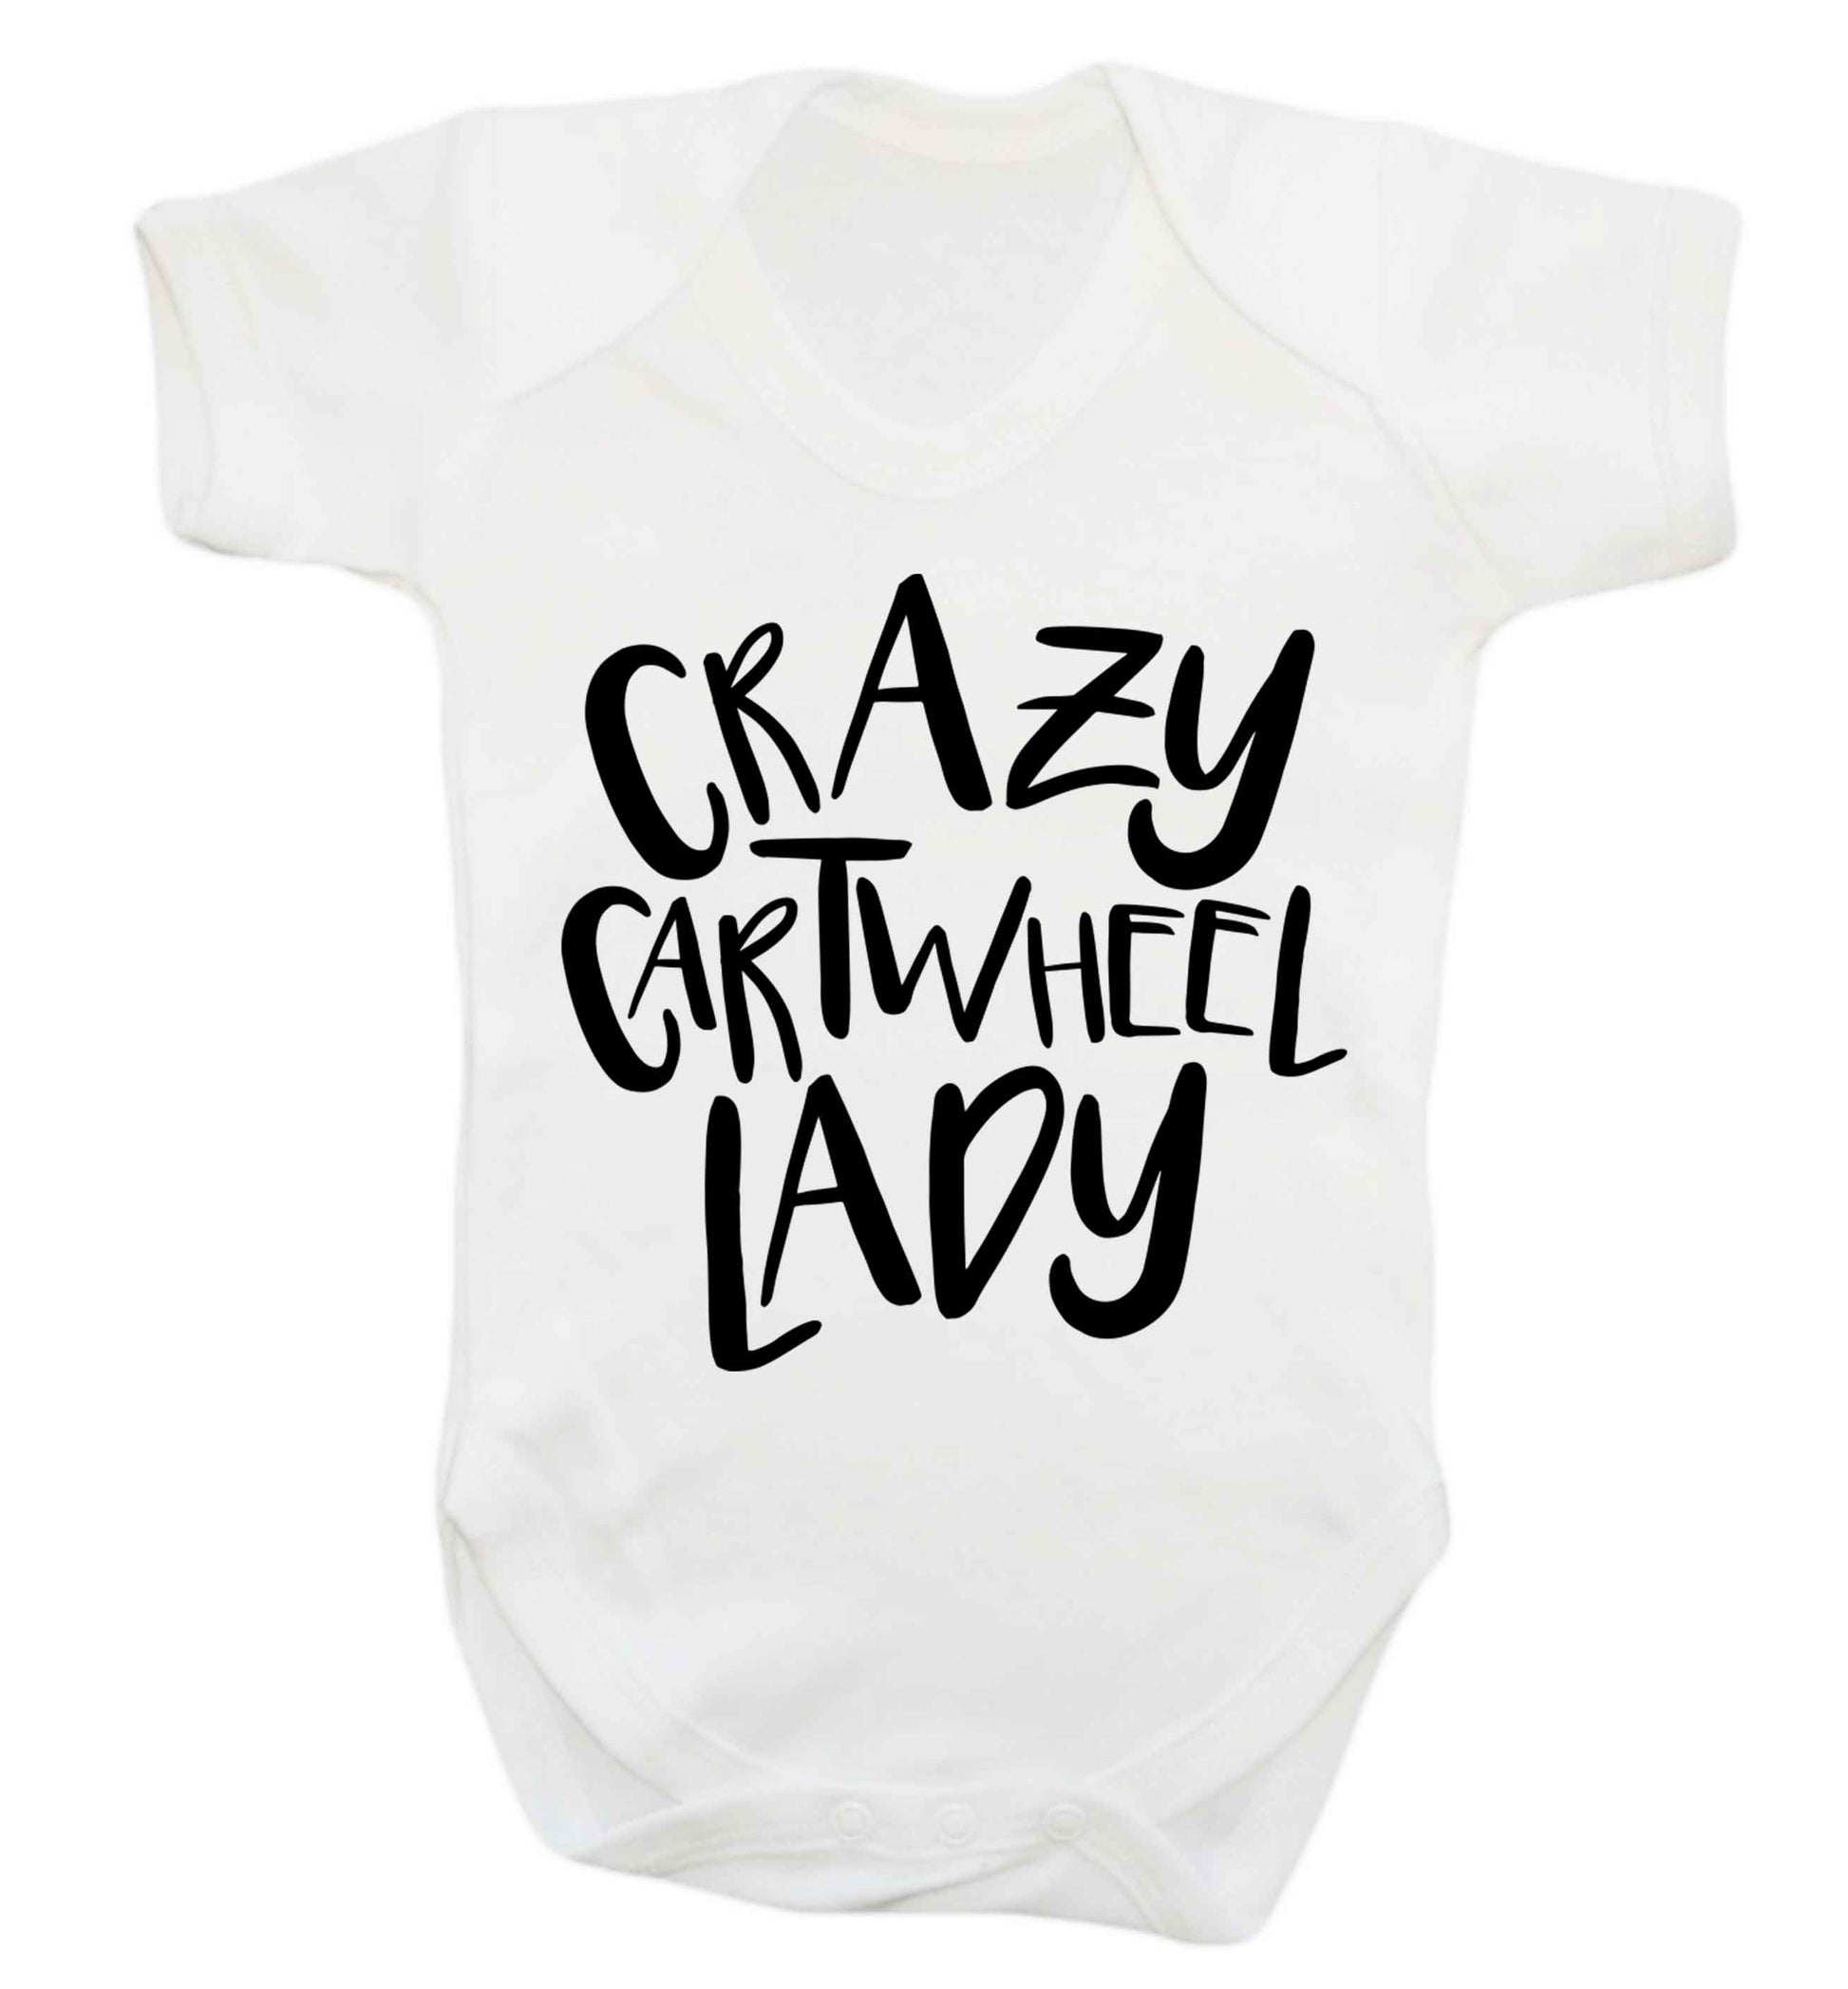 Crazy cartwheel lady Baby Vest white 18-24 months